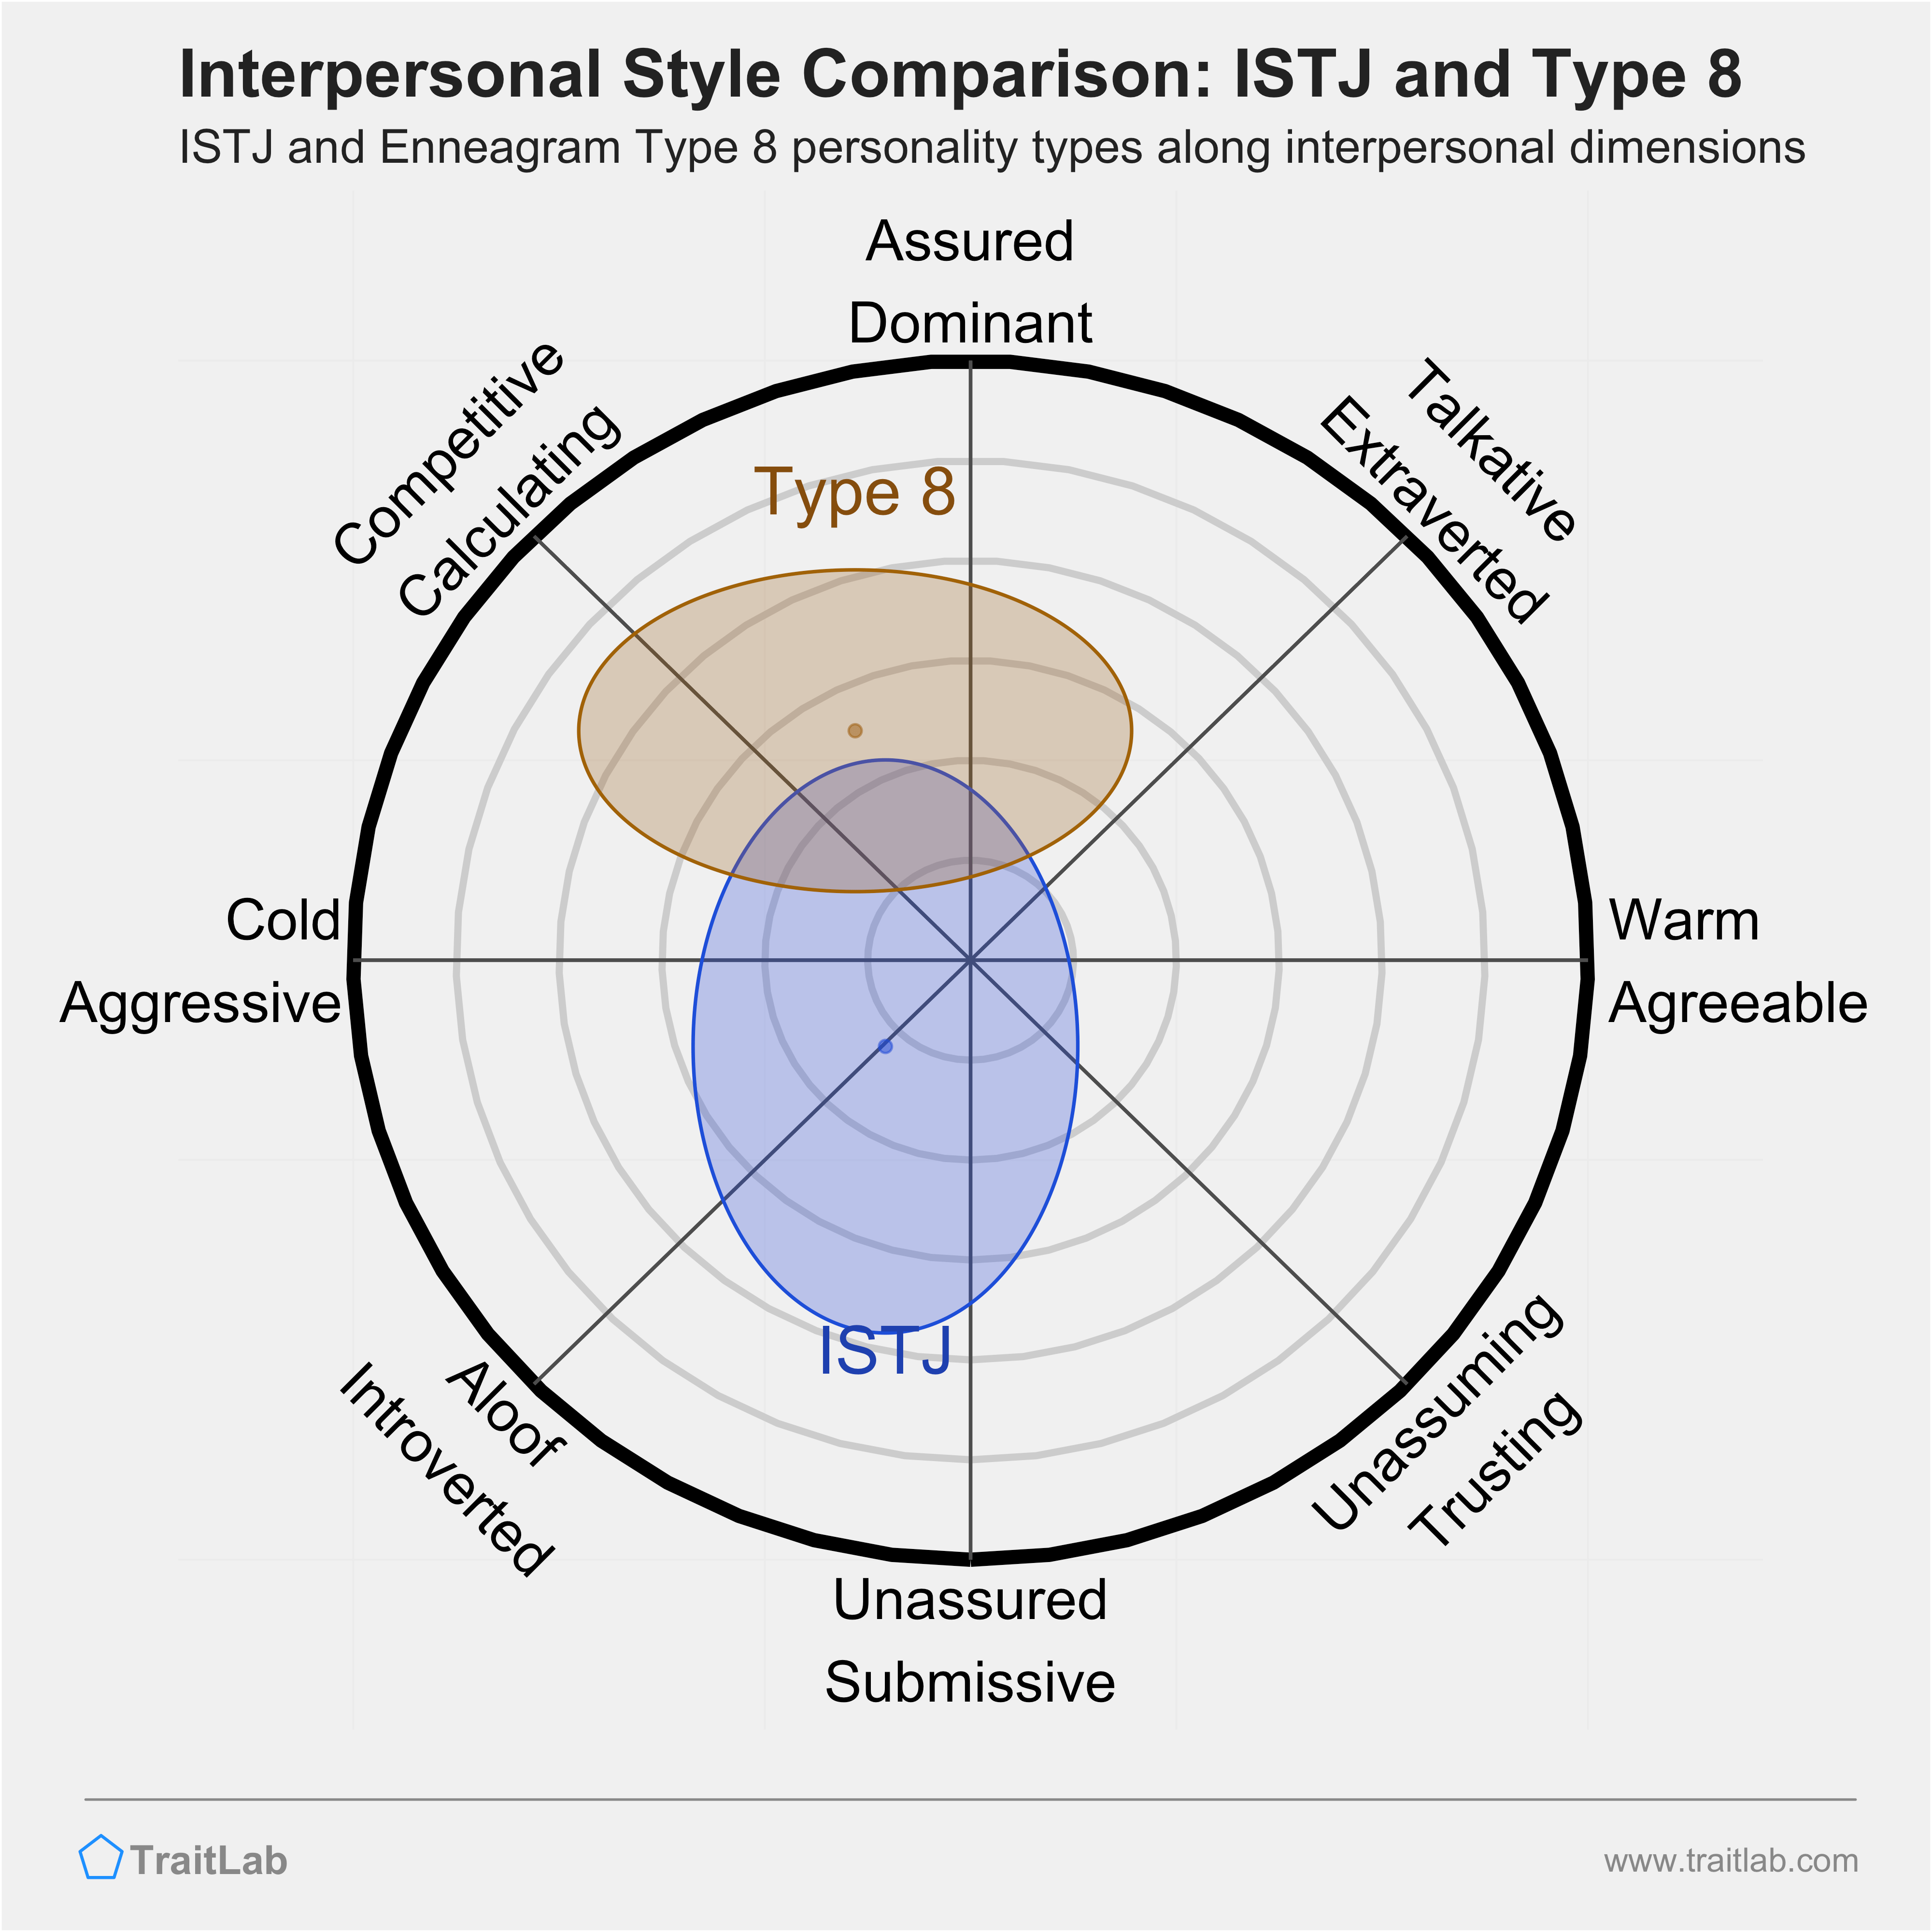 Enneagram ISTJ and Type 8 comparison across interpersonal dimensions